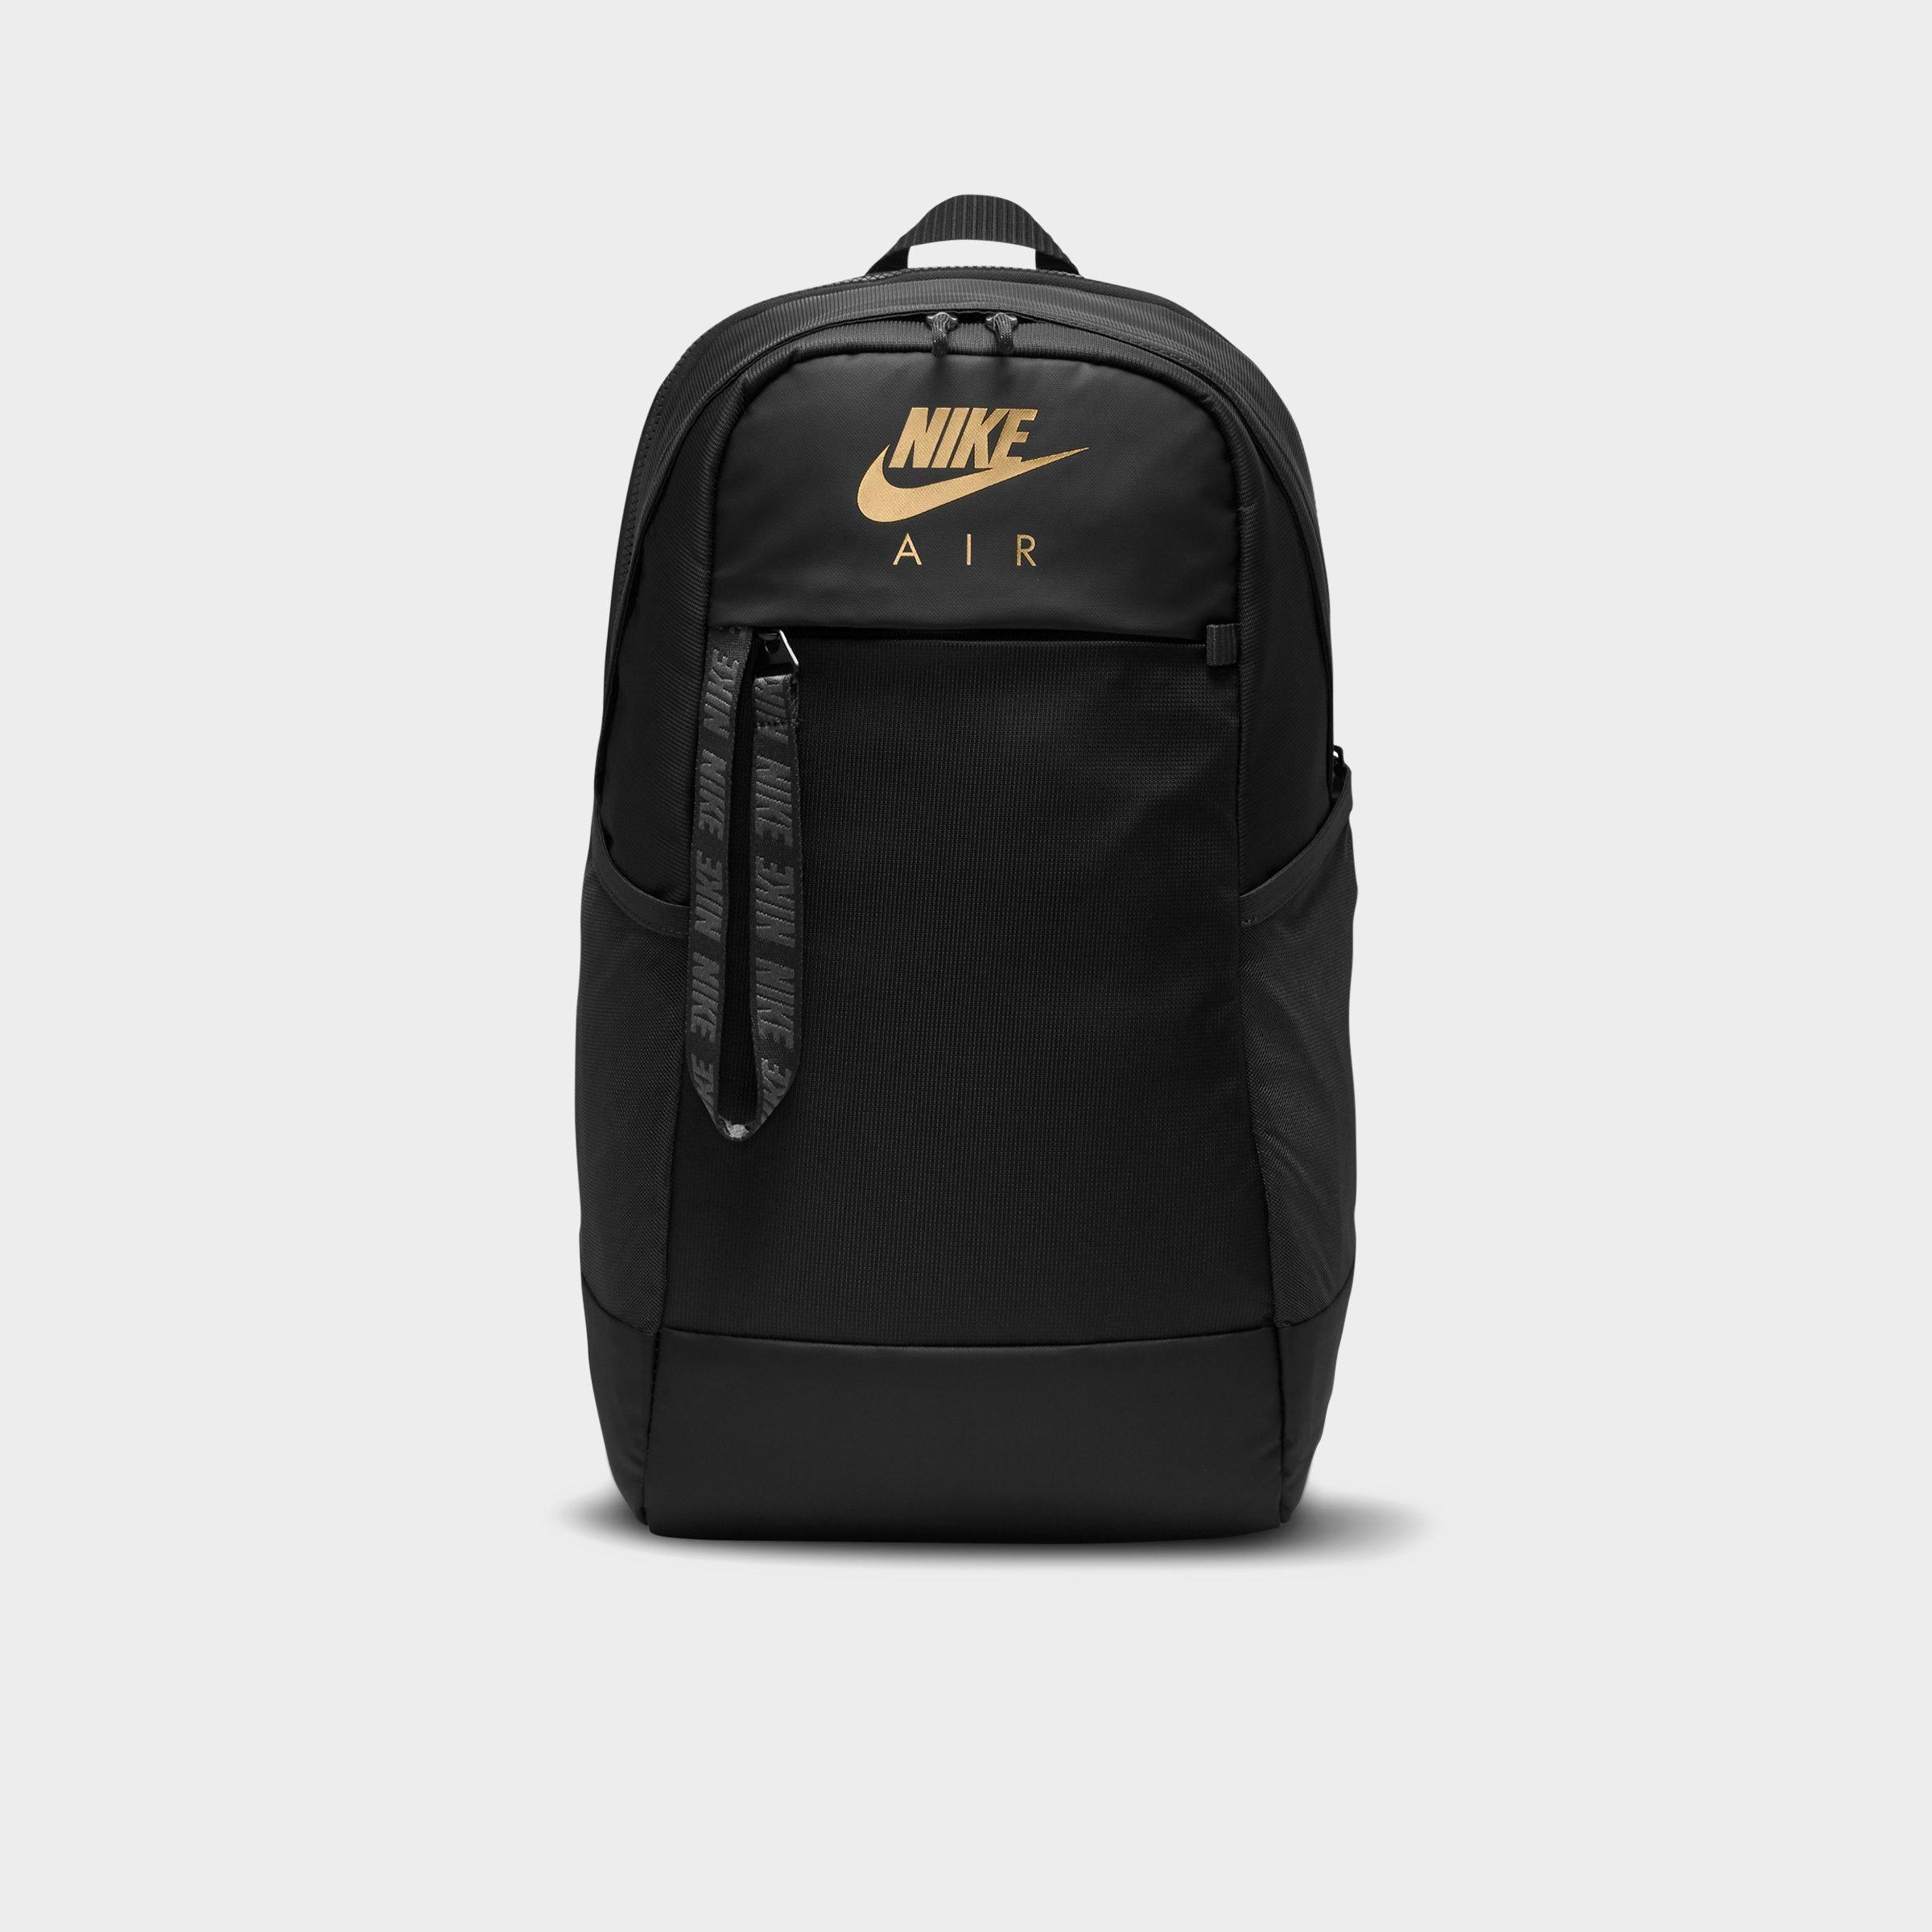 nike gold and black backpack